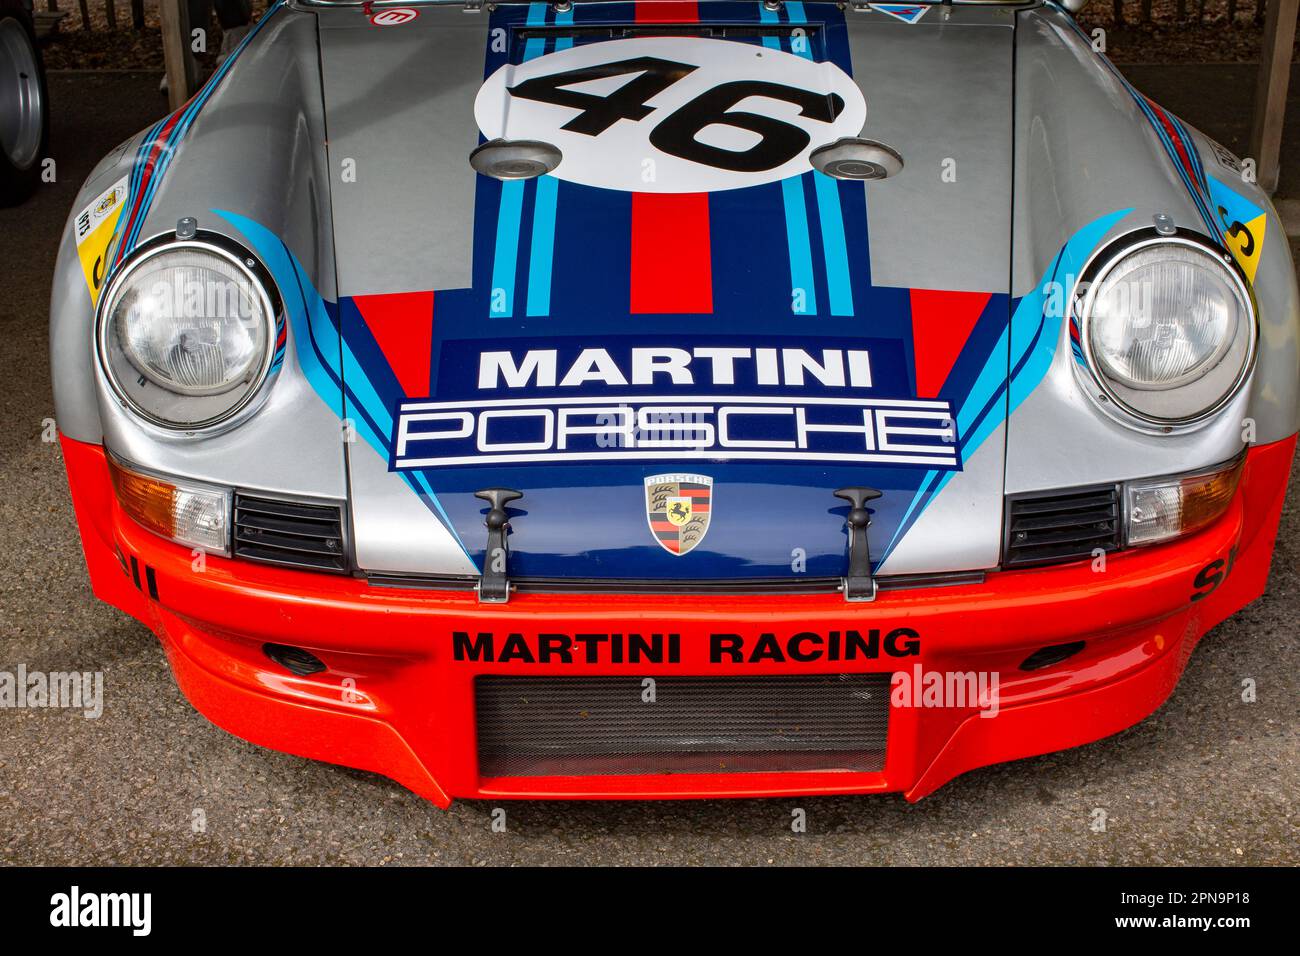 Martini Porsche at Members' Meeting at Goodwood Motor Circuit in West ...